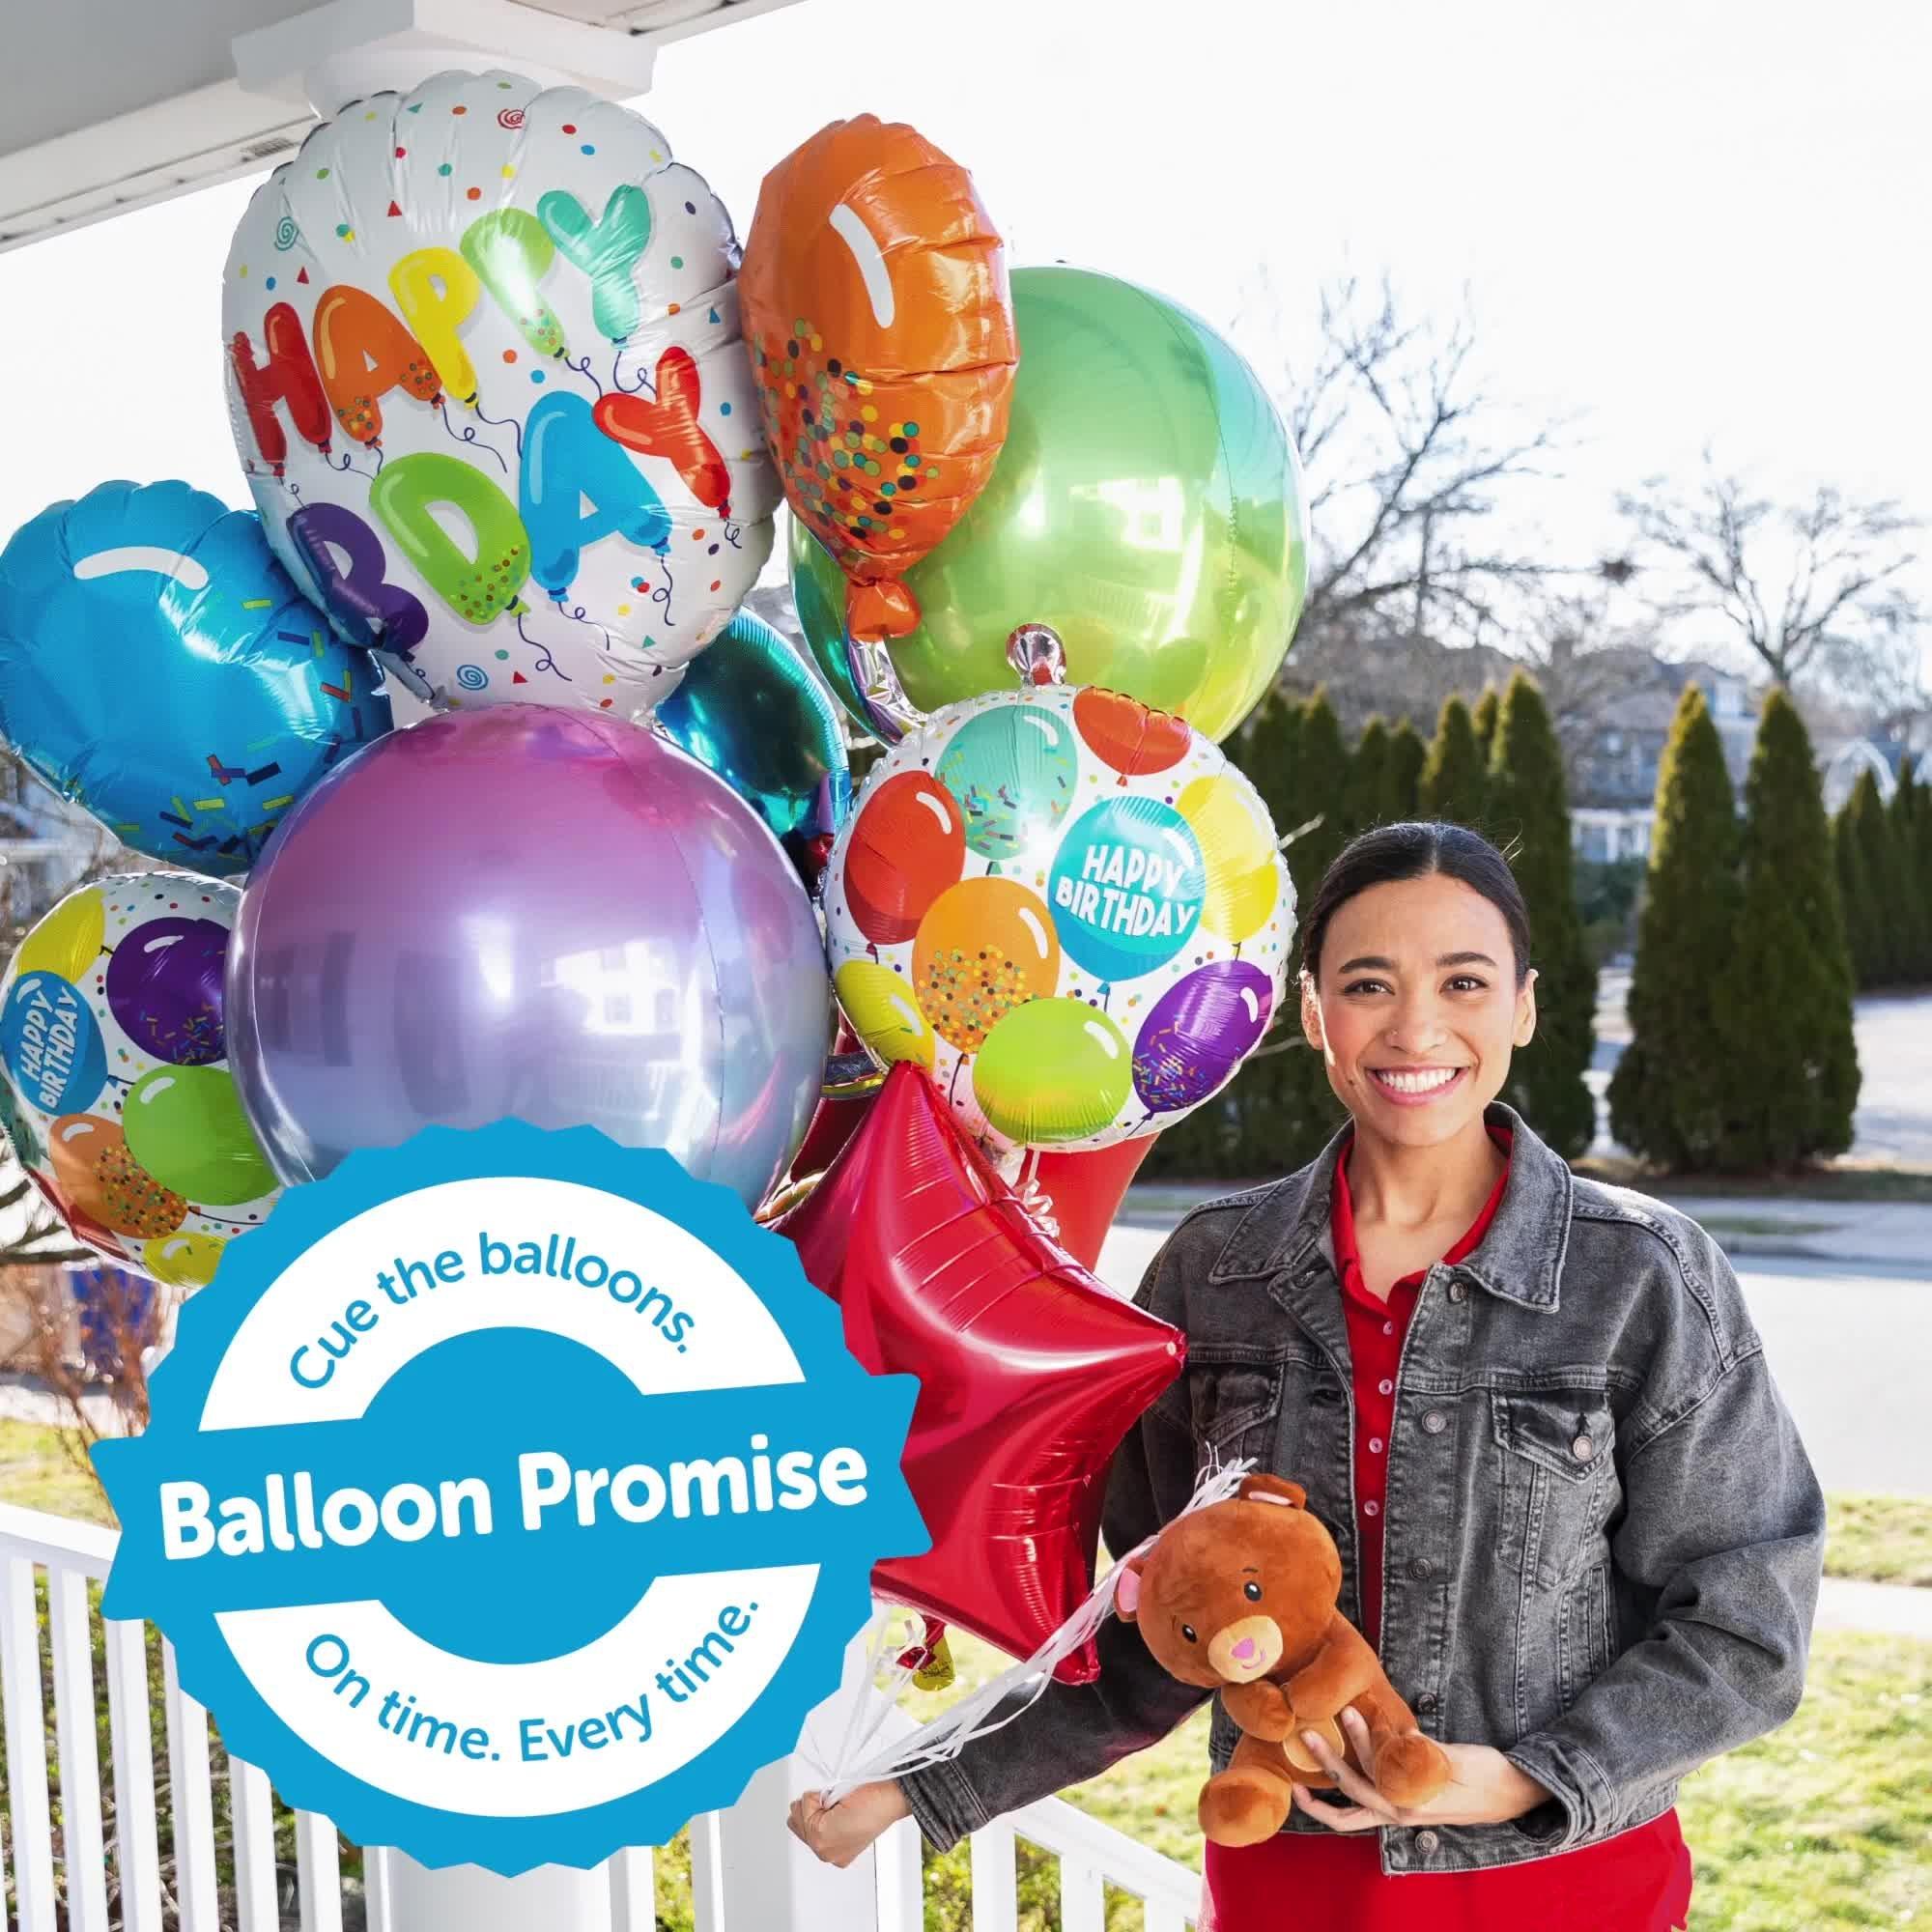 Air-Filled Sitting Birthday Bear Balloon, 15in